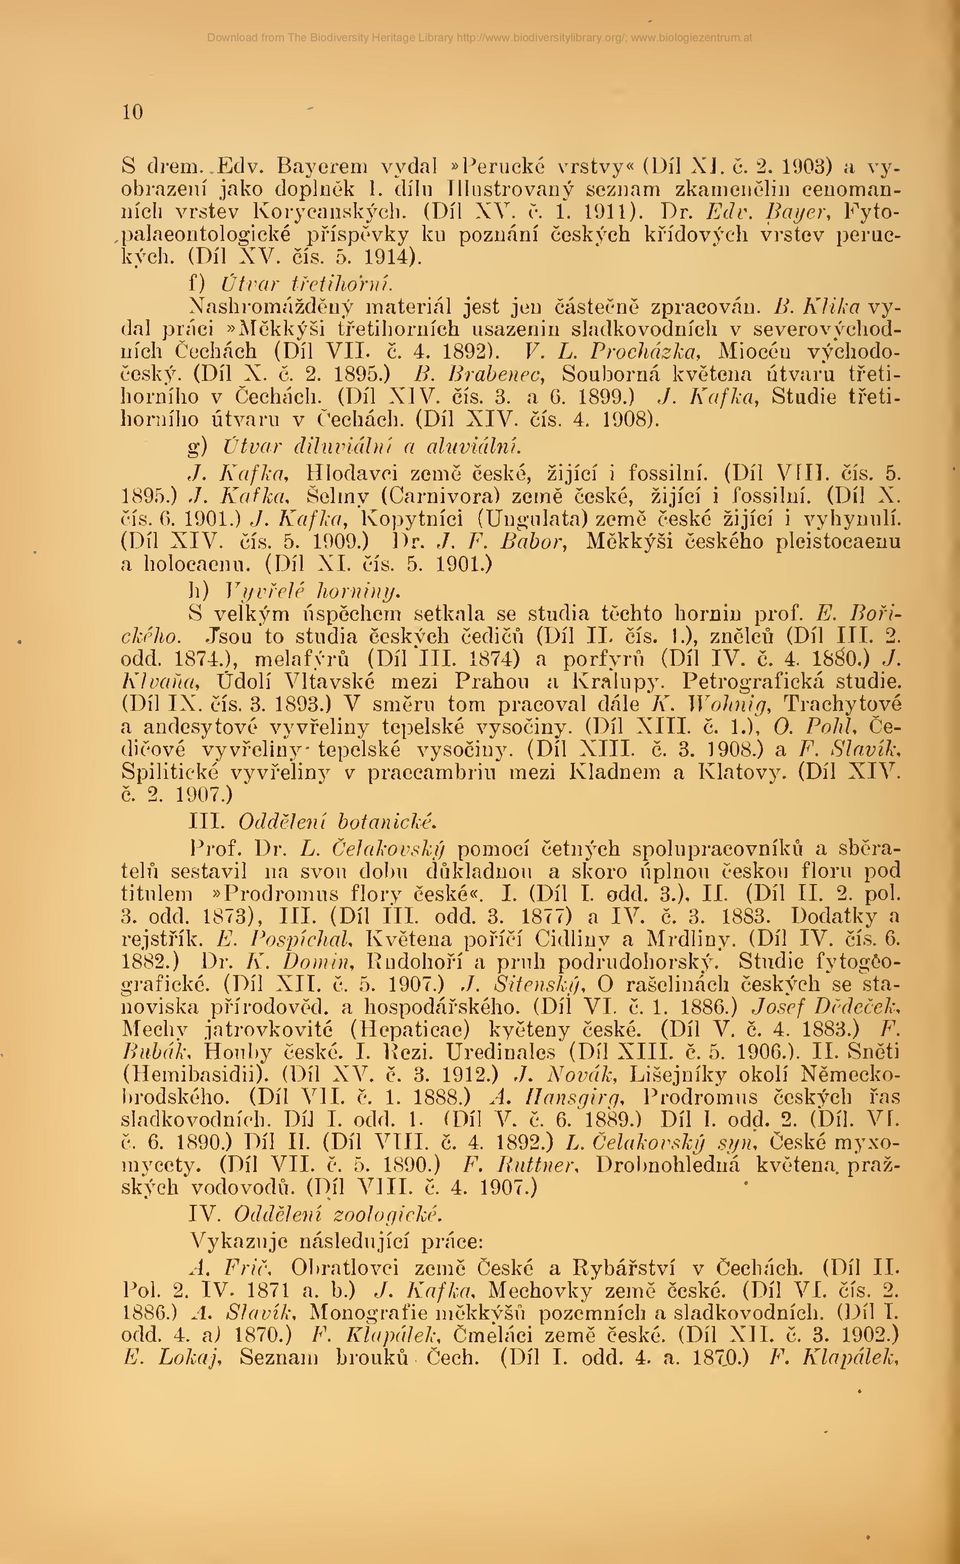 c. 4. 1892). F. L. Prochdzka, Miocen vychodocesky. (Dil X. c. 2. 1895.) B. Brabenec, Soubornä kvetena ütvaru tfetihorniho v Cechäch. (Dil XIV. eis. 3. a 6. 1899.) J.